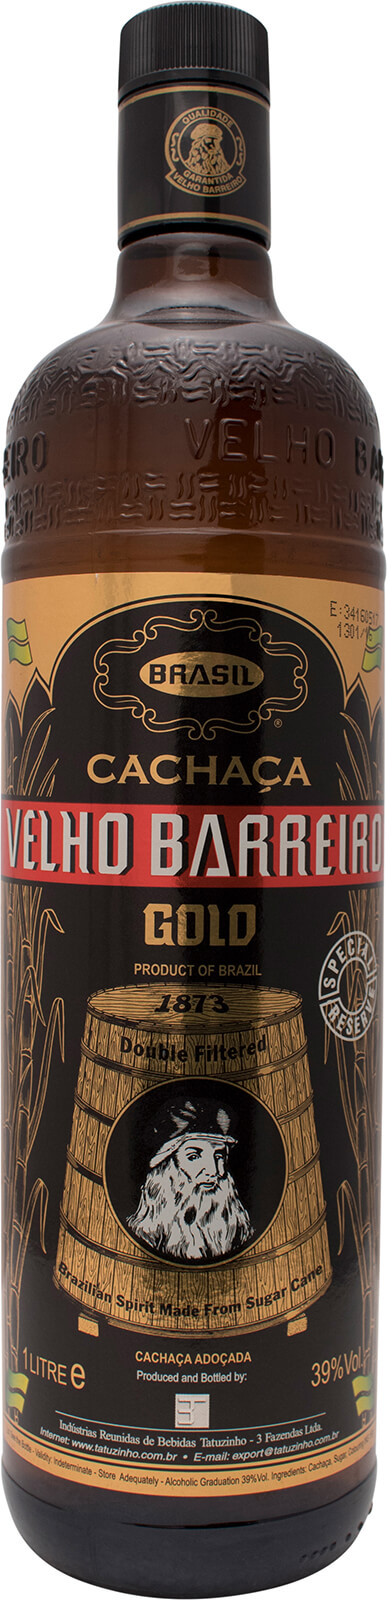 39% Velho Gold Cachaca Barreiro (3 1 Jahre) Liter